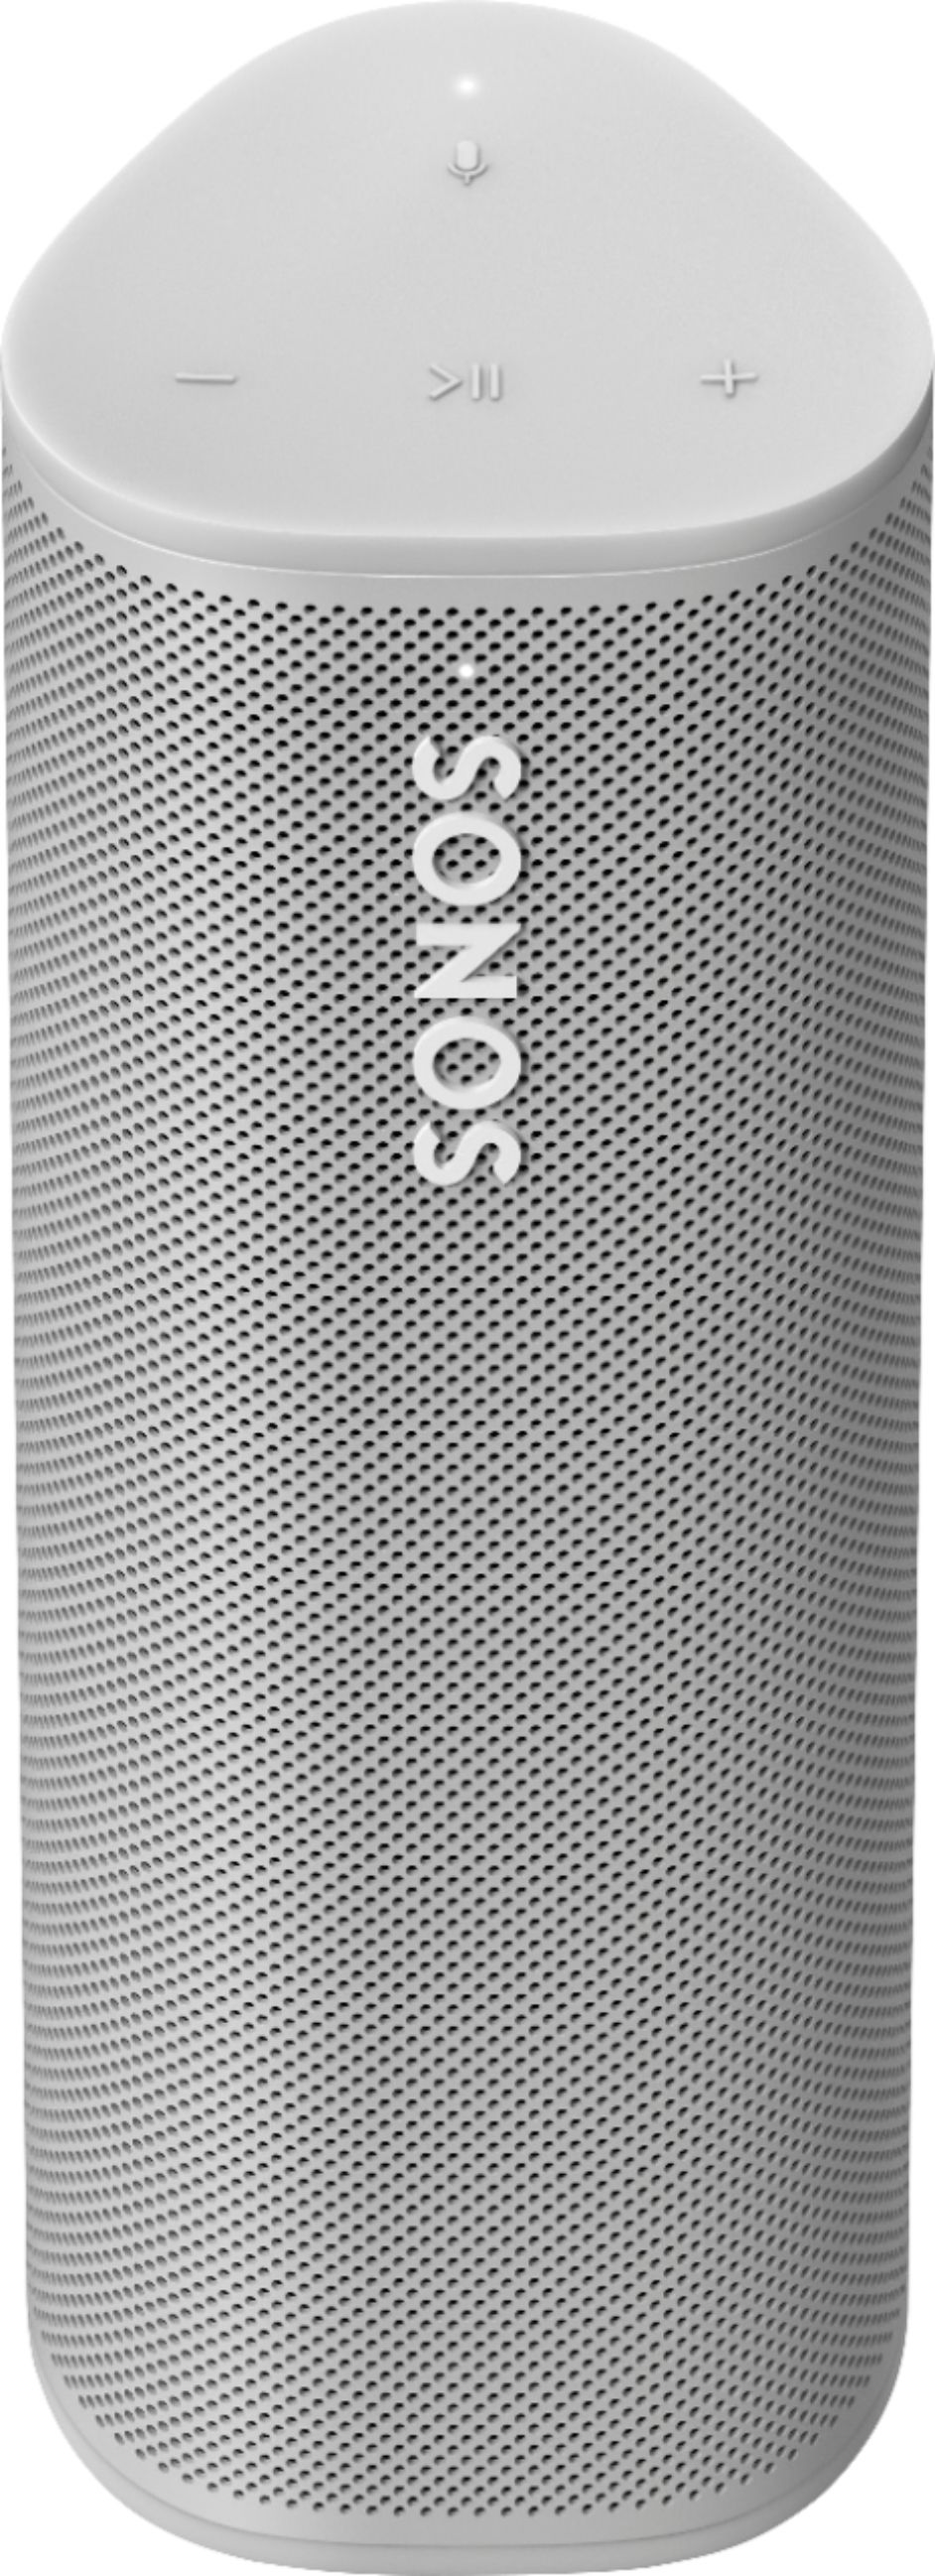 ROAM1US1 | Sonos Roam, White, Each